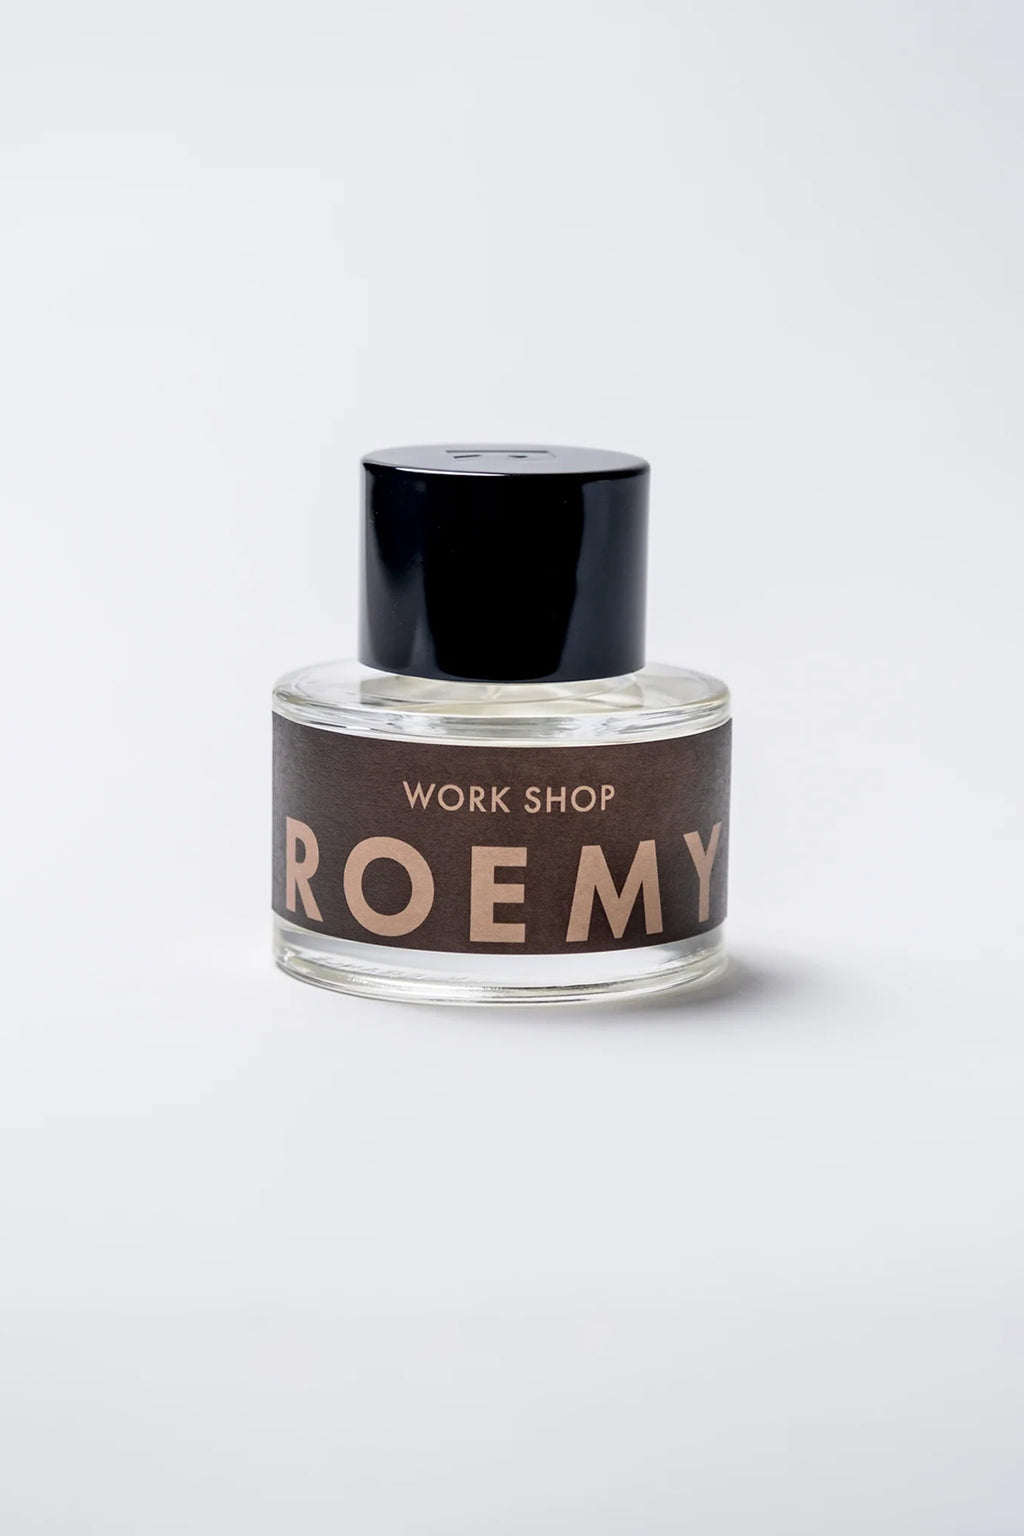 ROEMY - Work Shop - 55ml